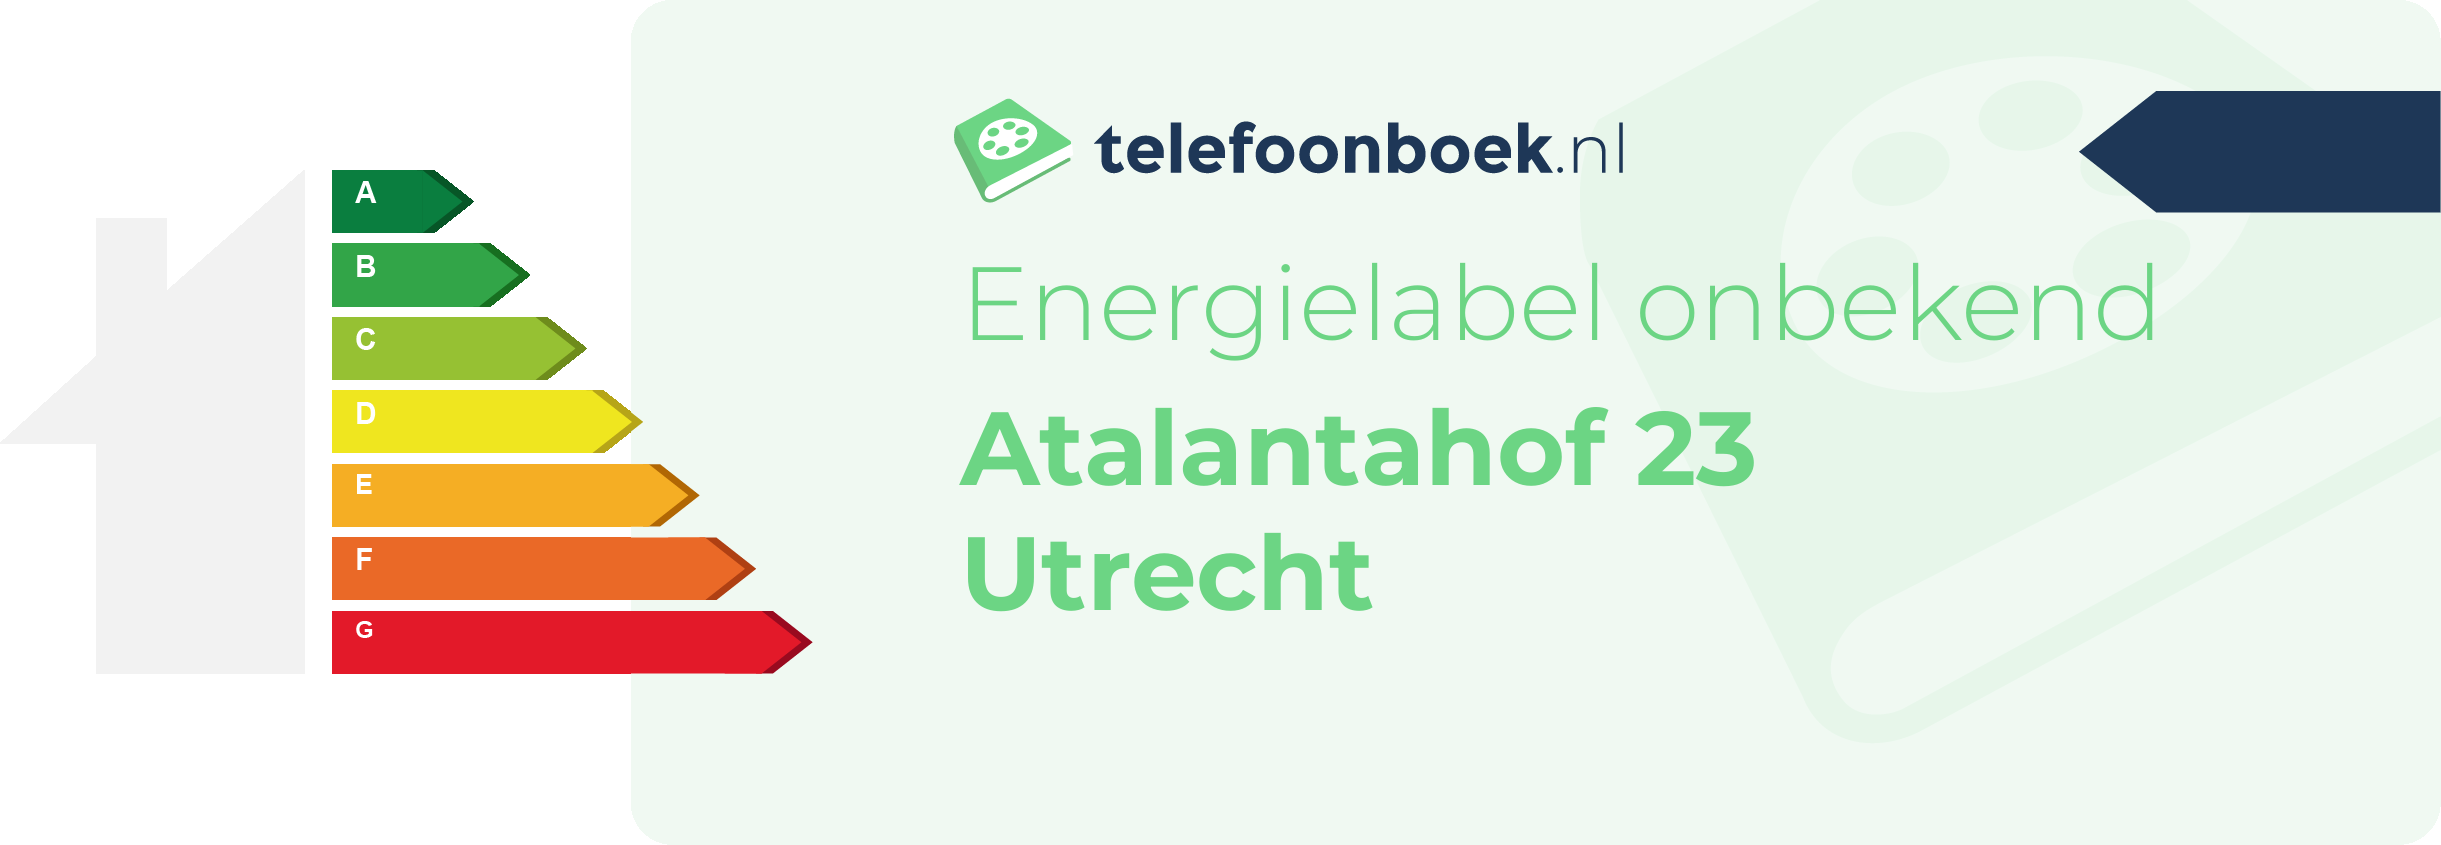 Energielabel Atalantahof 23 Utrecht